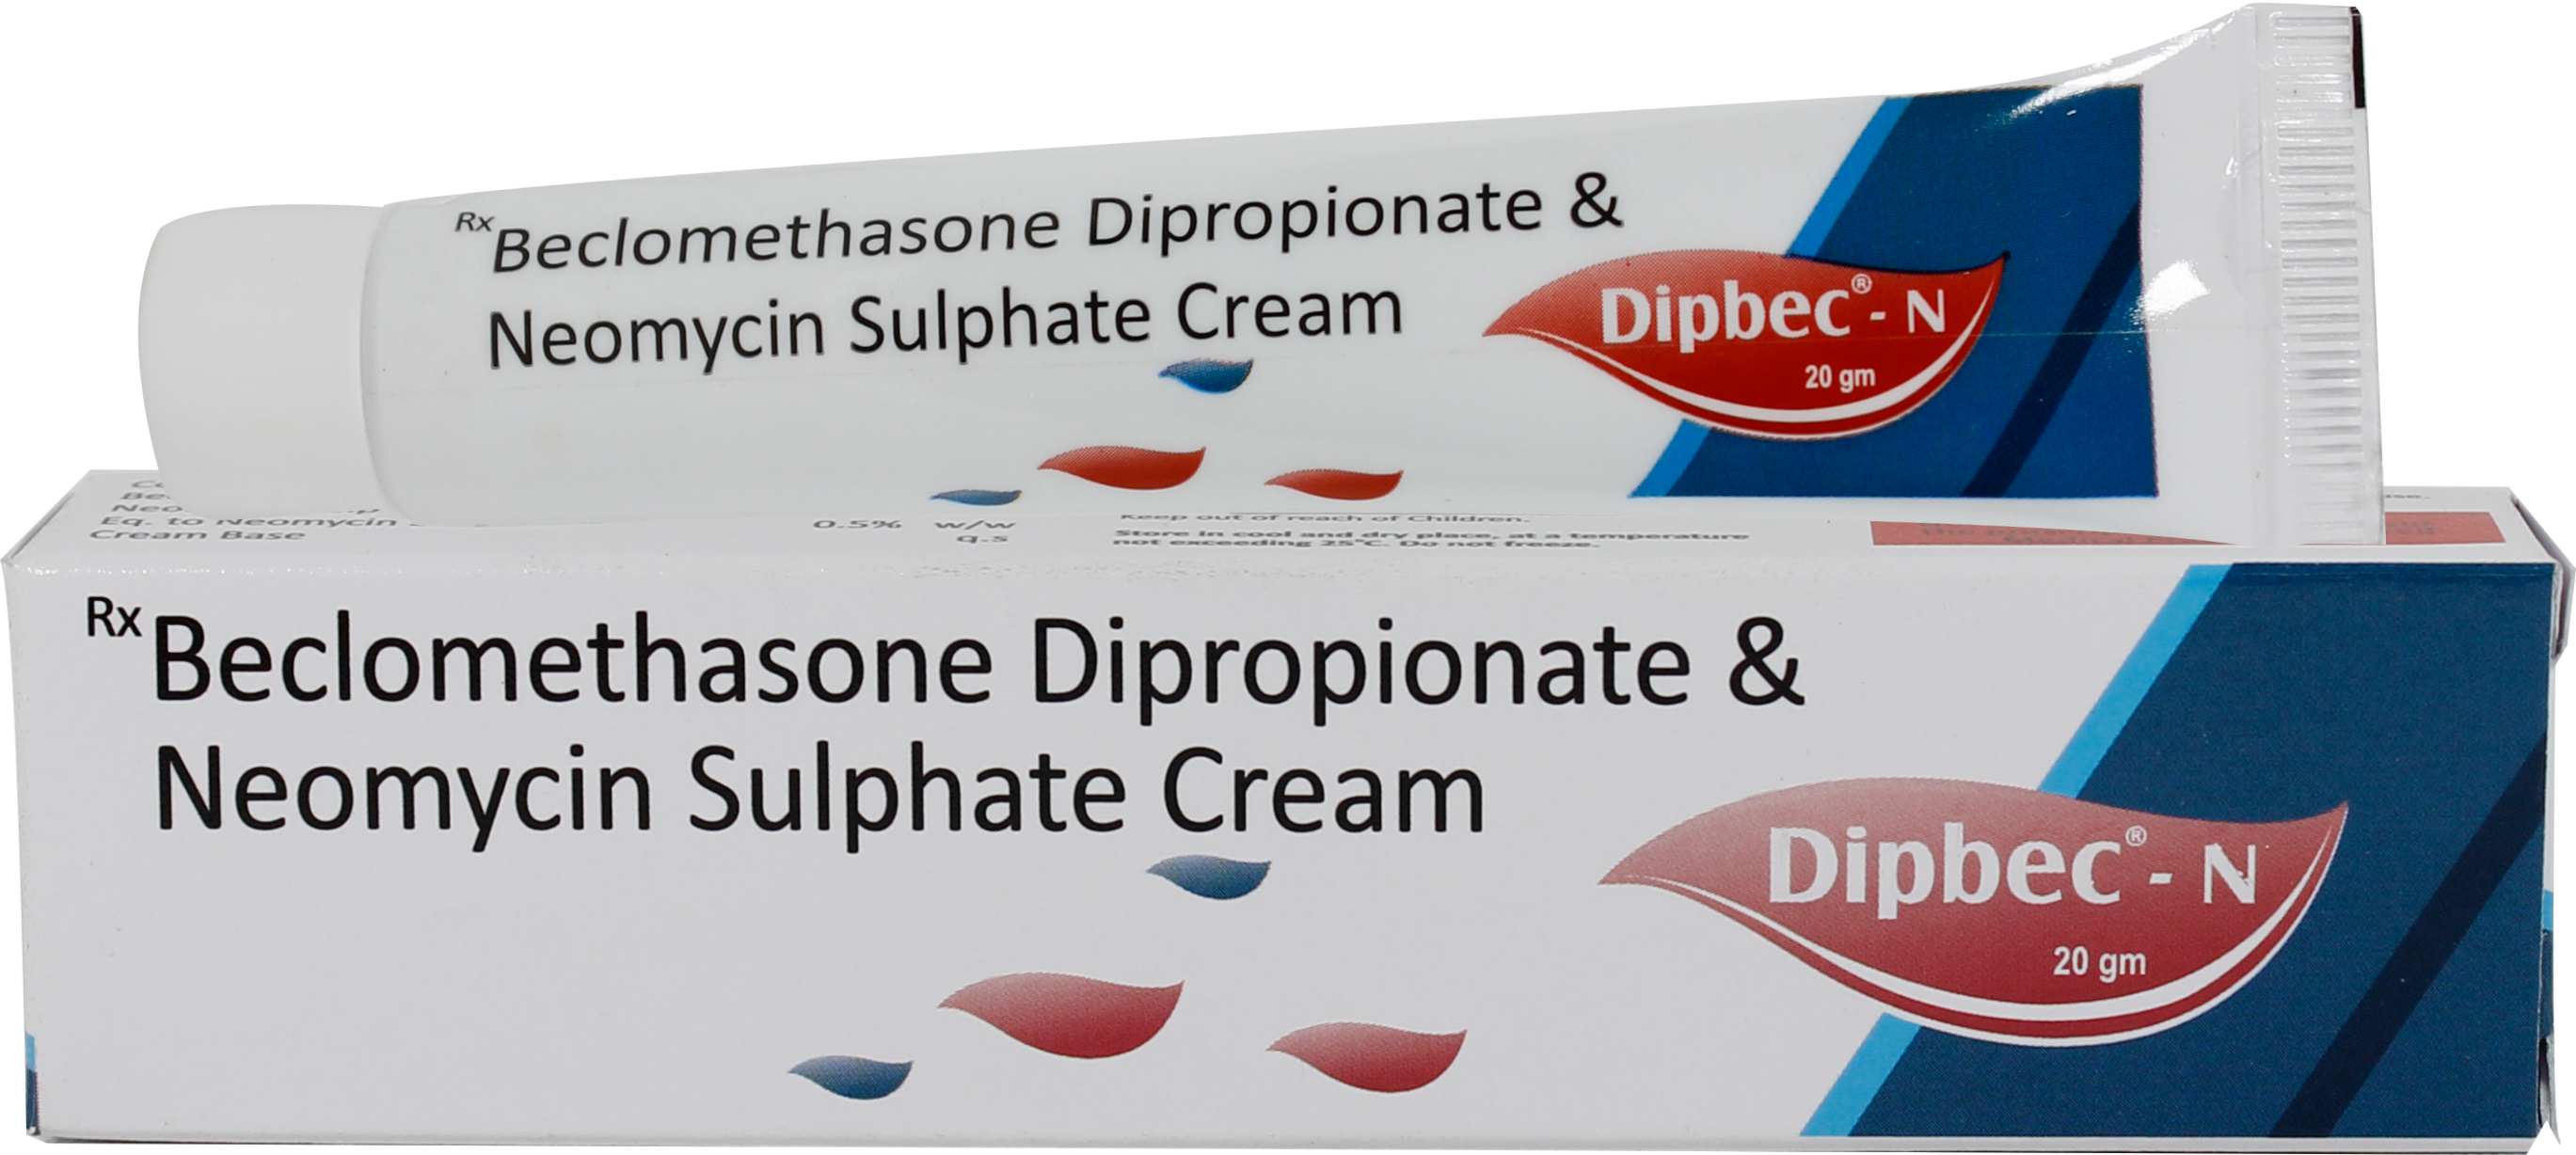 Beclomethasone Dipropionate & Neomycin Sulphate Cream Manufacturer & Wholesaler Supplier